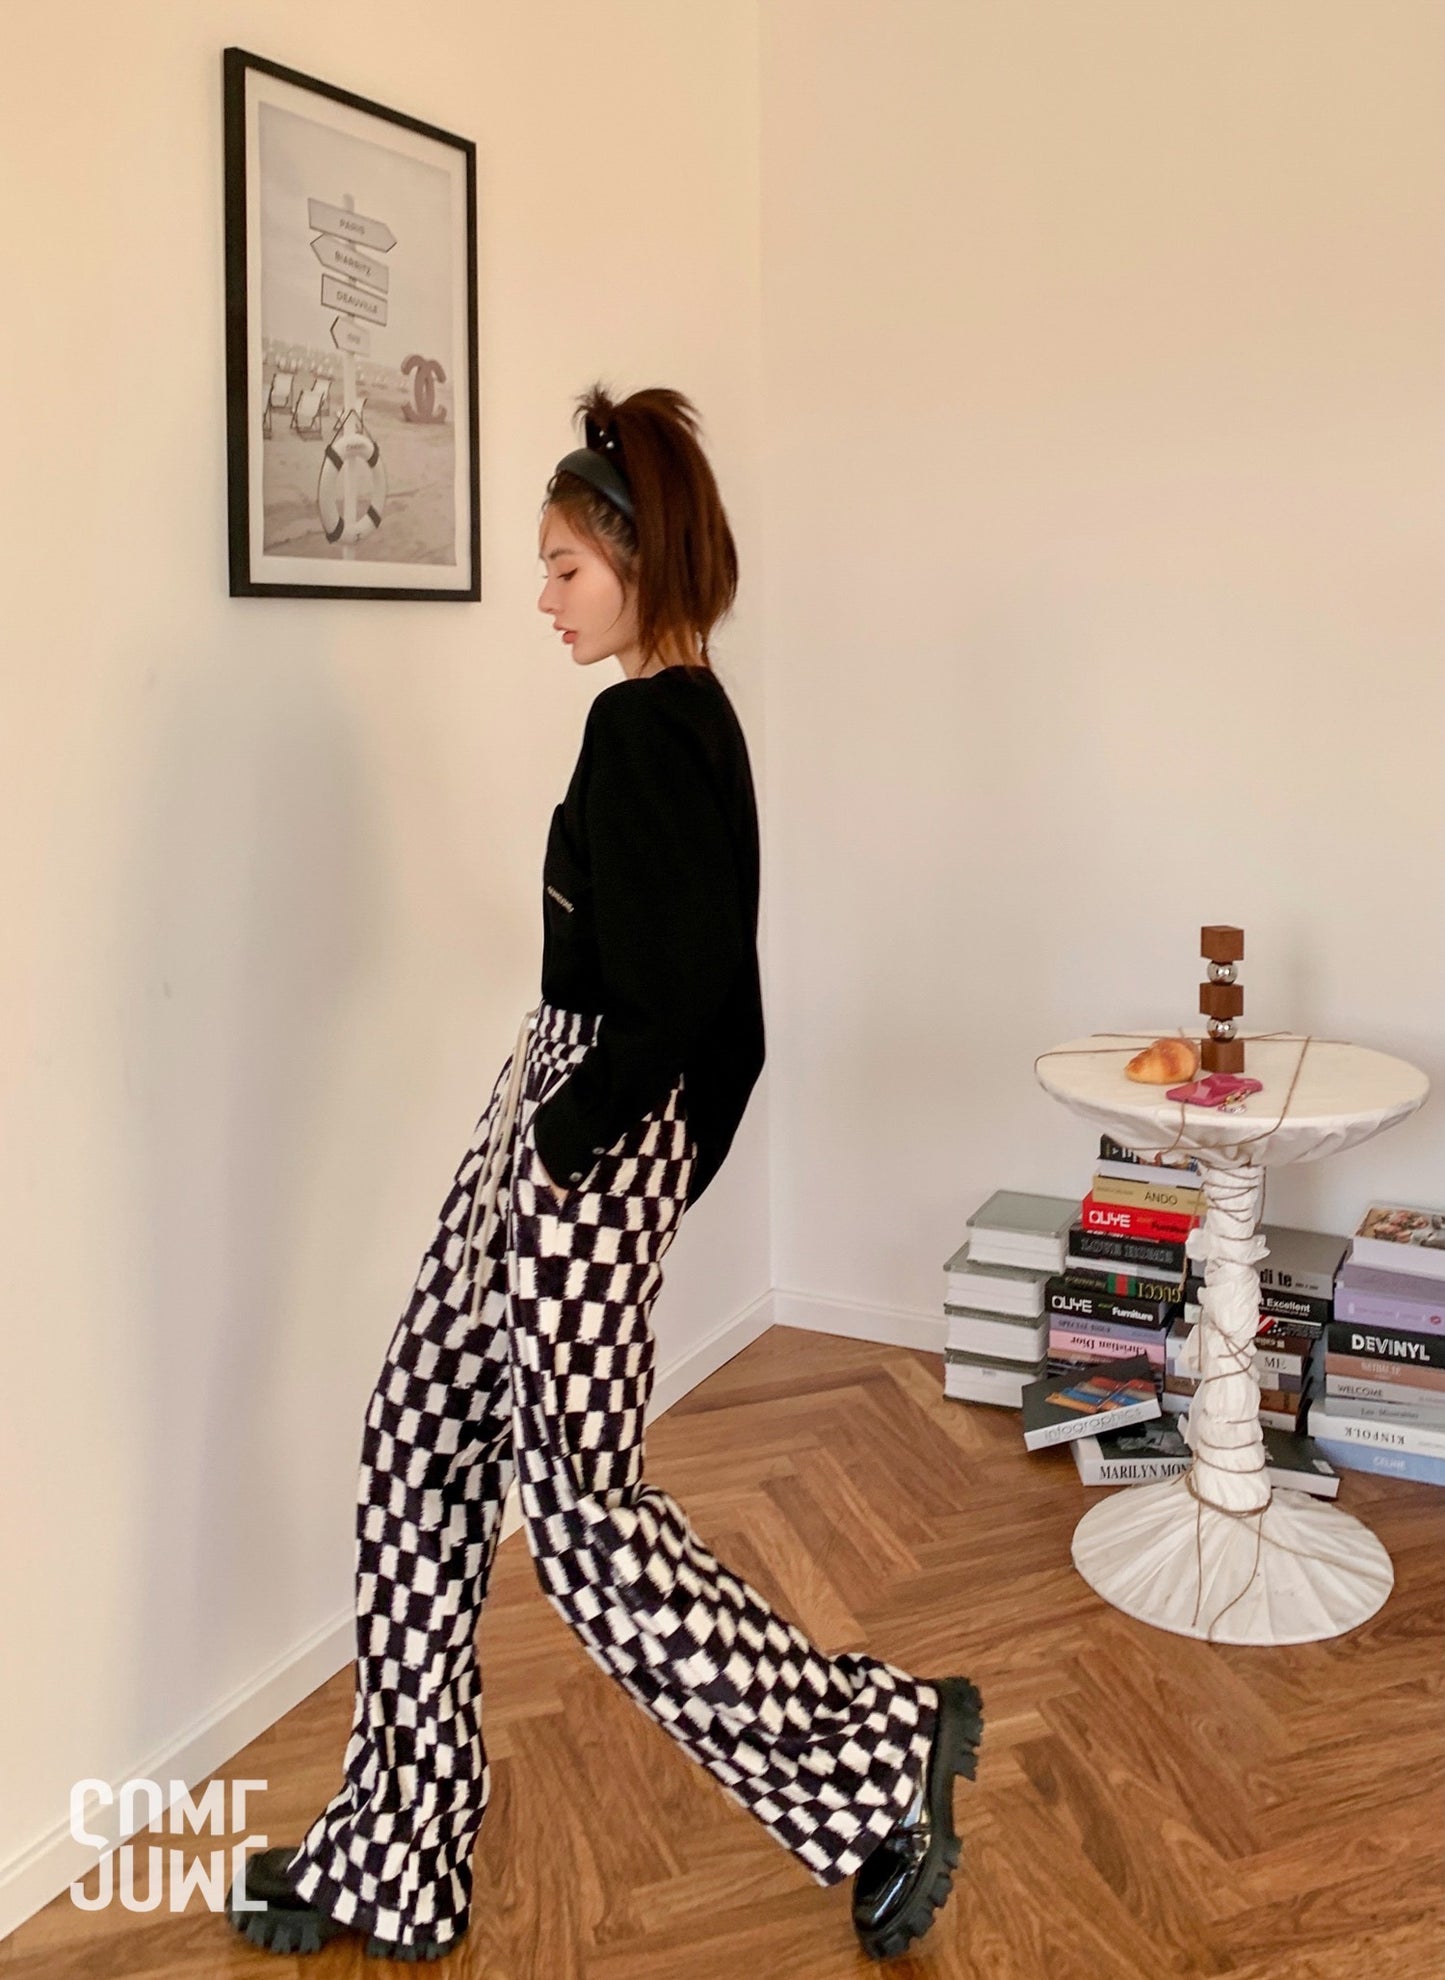 Checkered-board Print Wide-Leg Pants